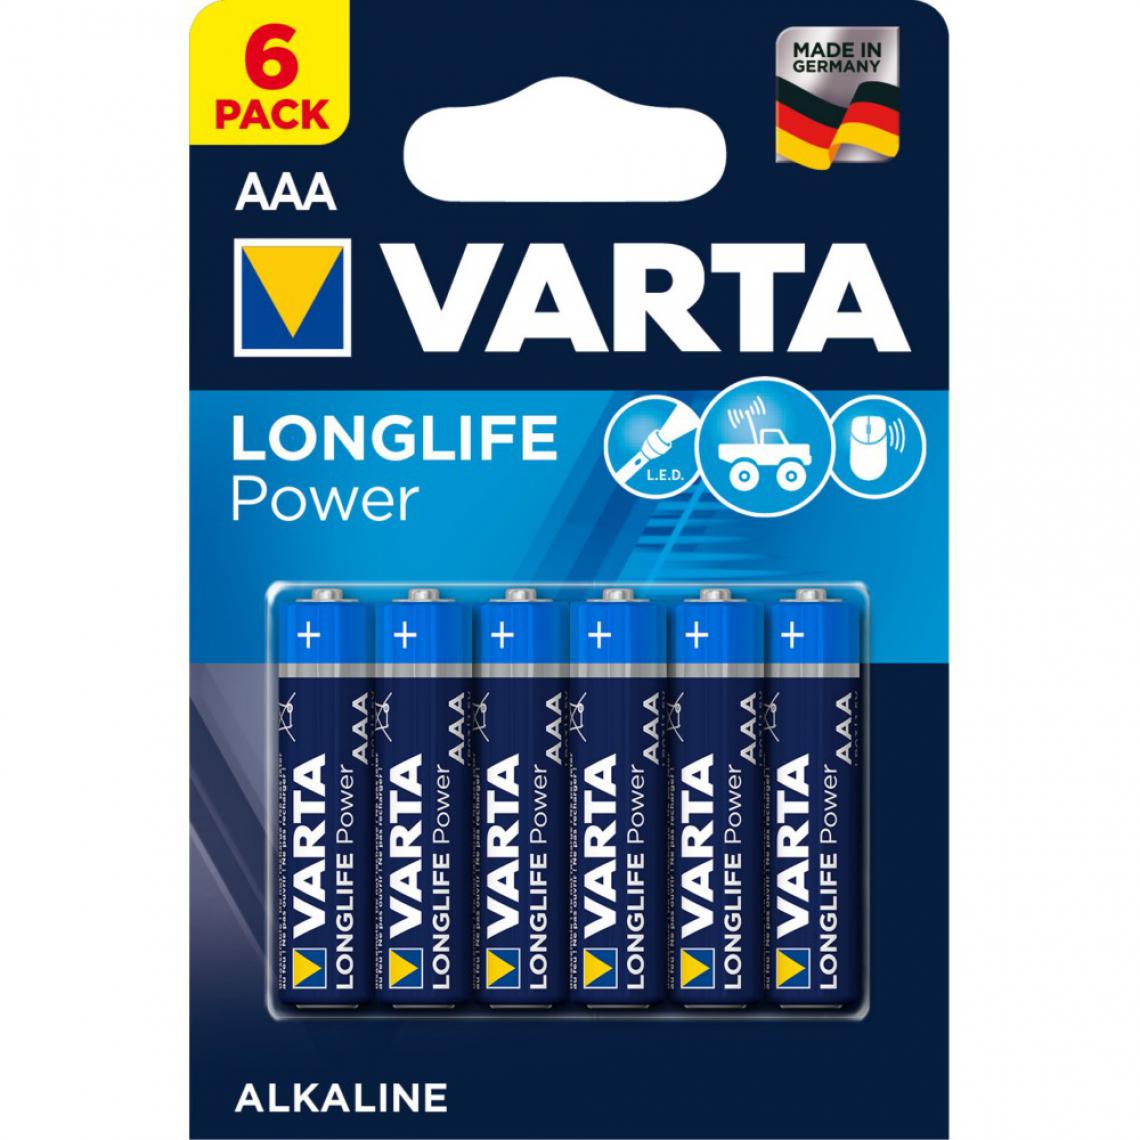 Varta - Lot de 6 piles alcaline VARTA Longlife Power AAA/LR03 - Piles standard